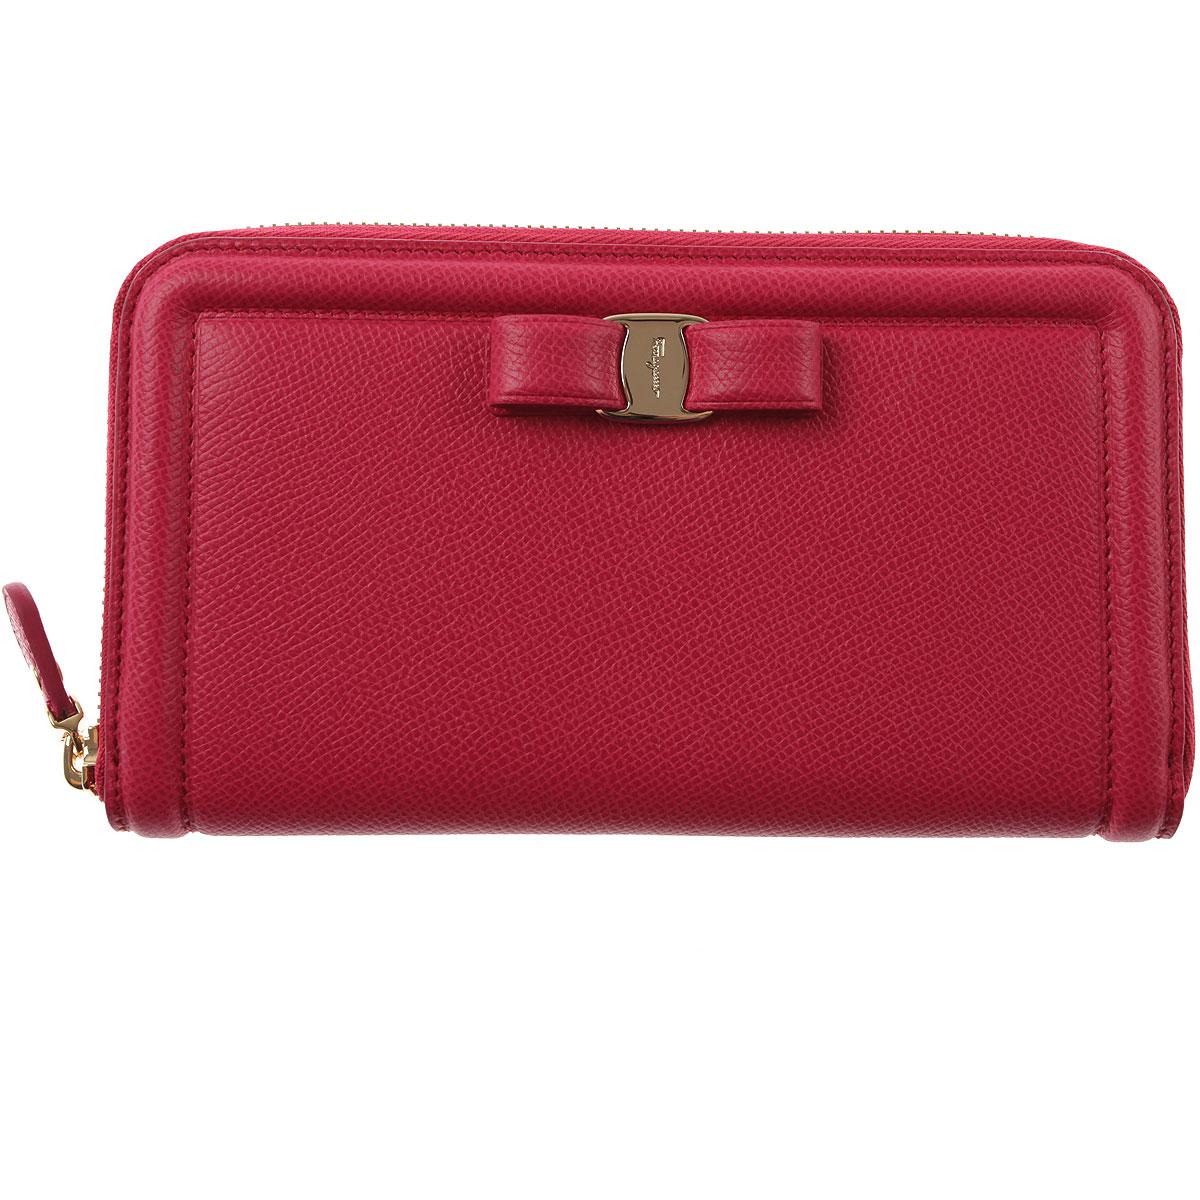 Ferragamo Leather Wallet For Women On Sale In Outlet in Red - Lyst